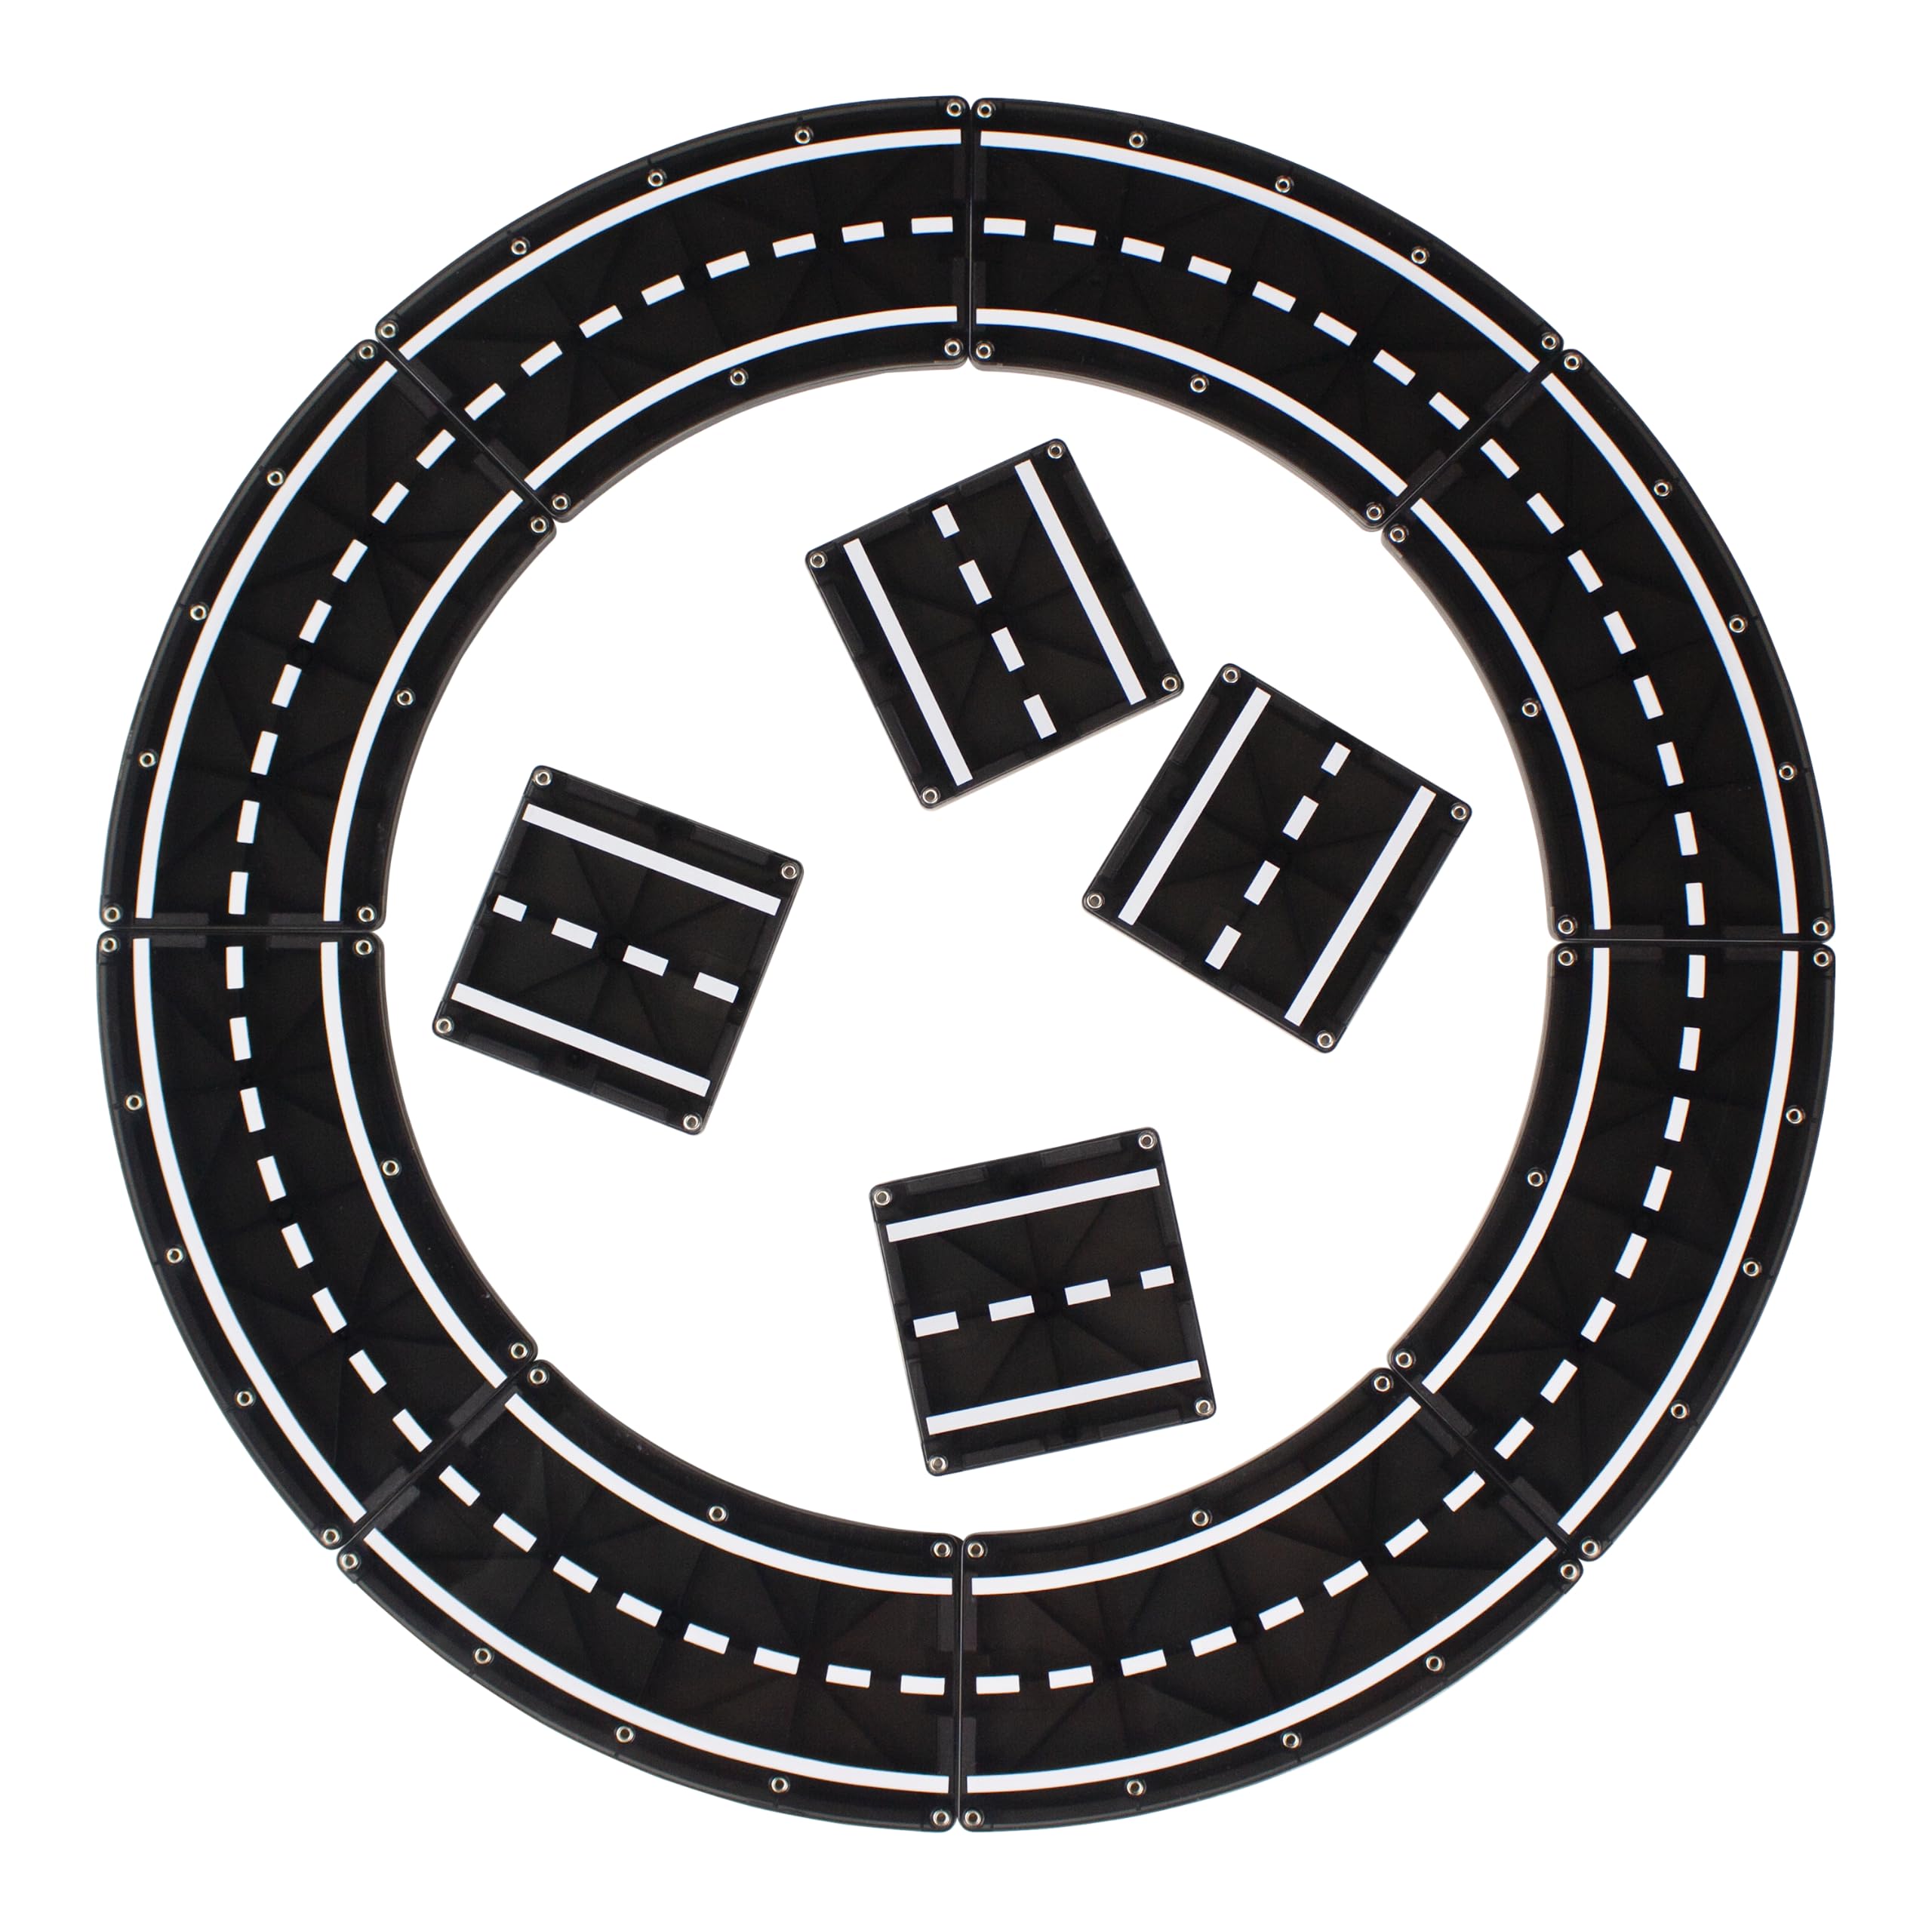 MAGNA-TILES XTRAS: Roads 12 Piece Magnetic Construction Set, The ORIGINAL Magnetic Building Brand